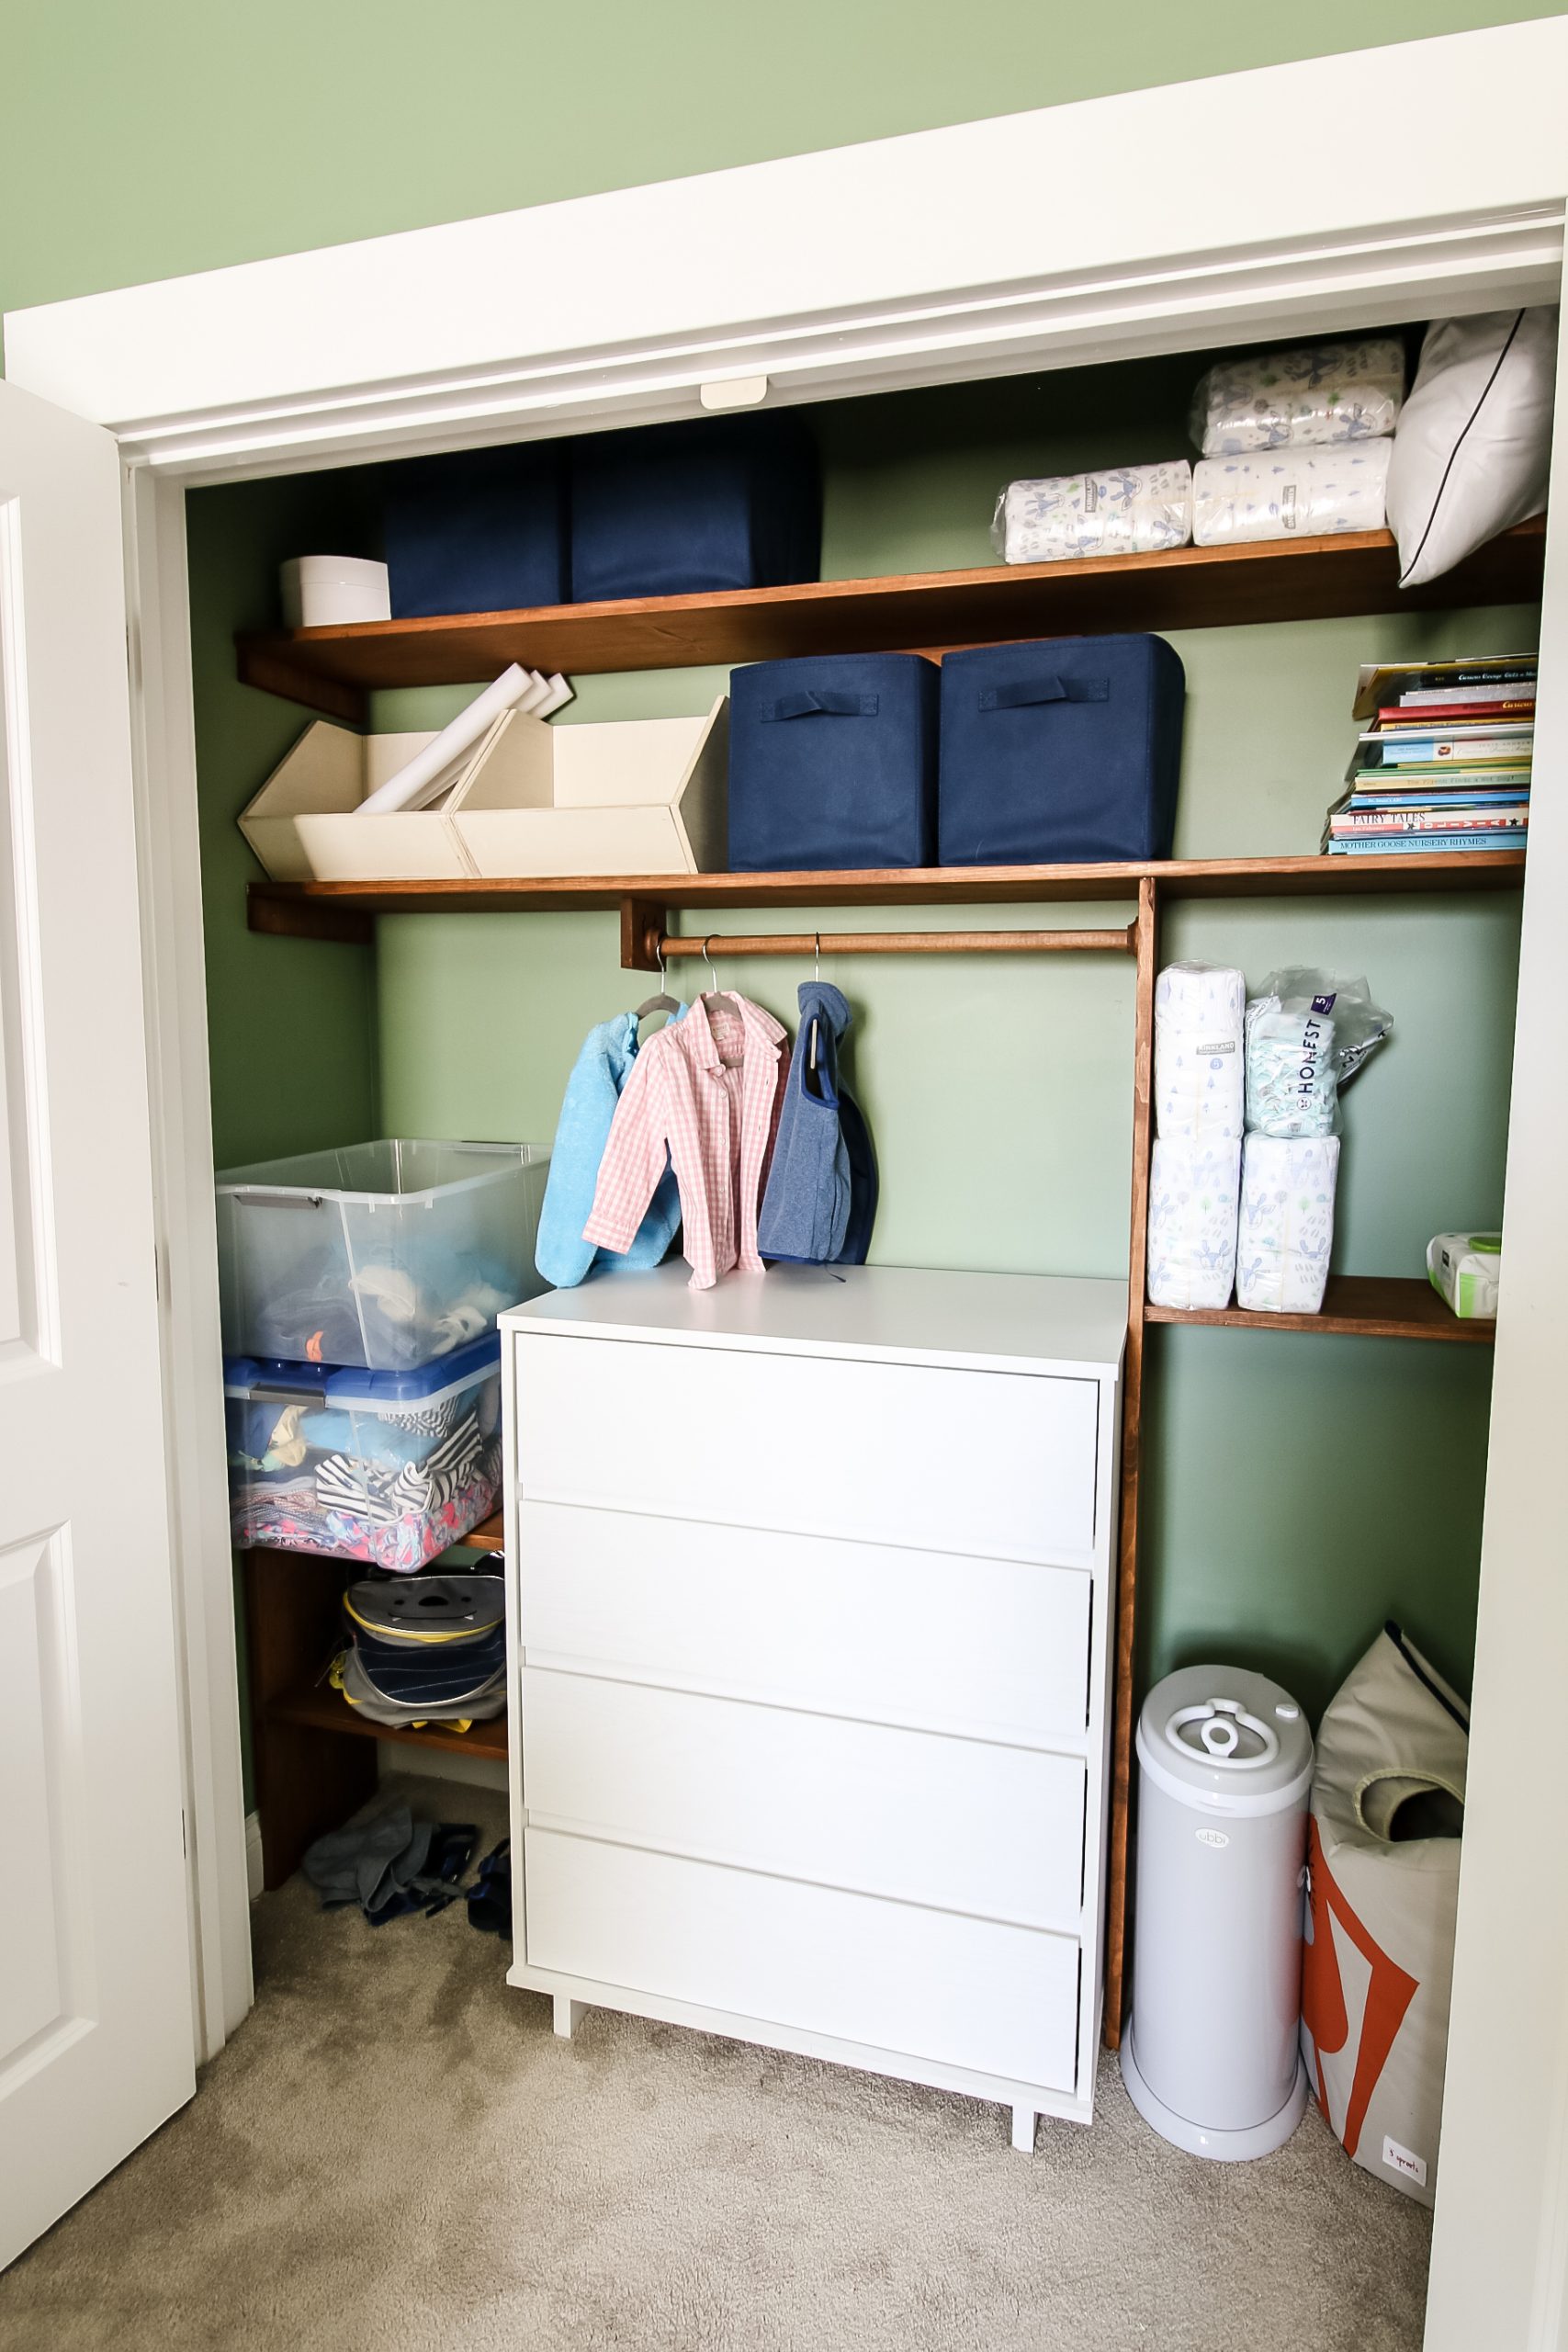 How to Build a Simple Inexpensive DIY Closet Organizer